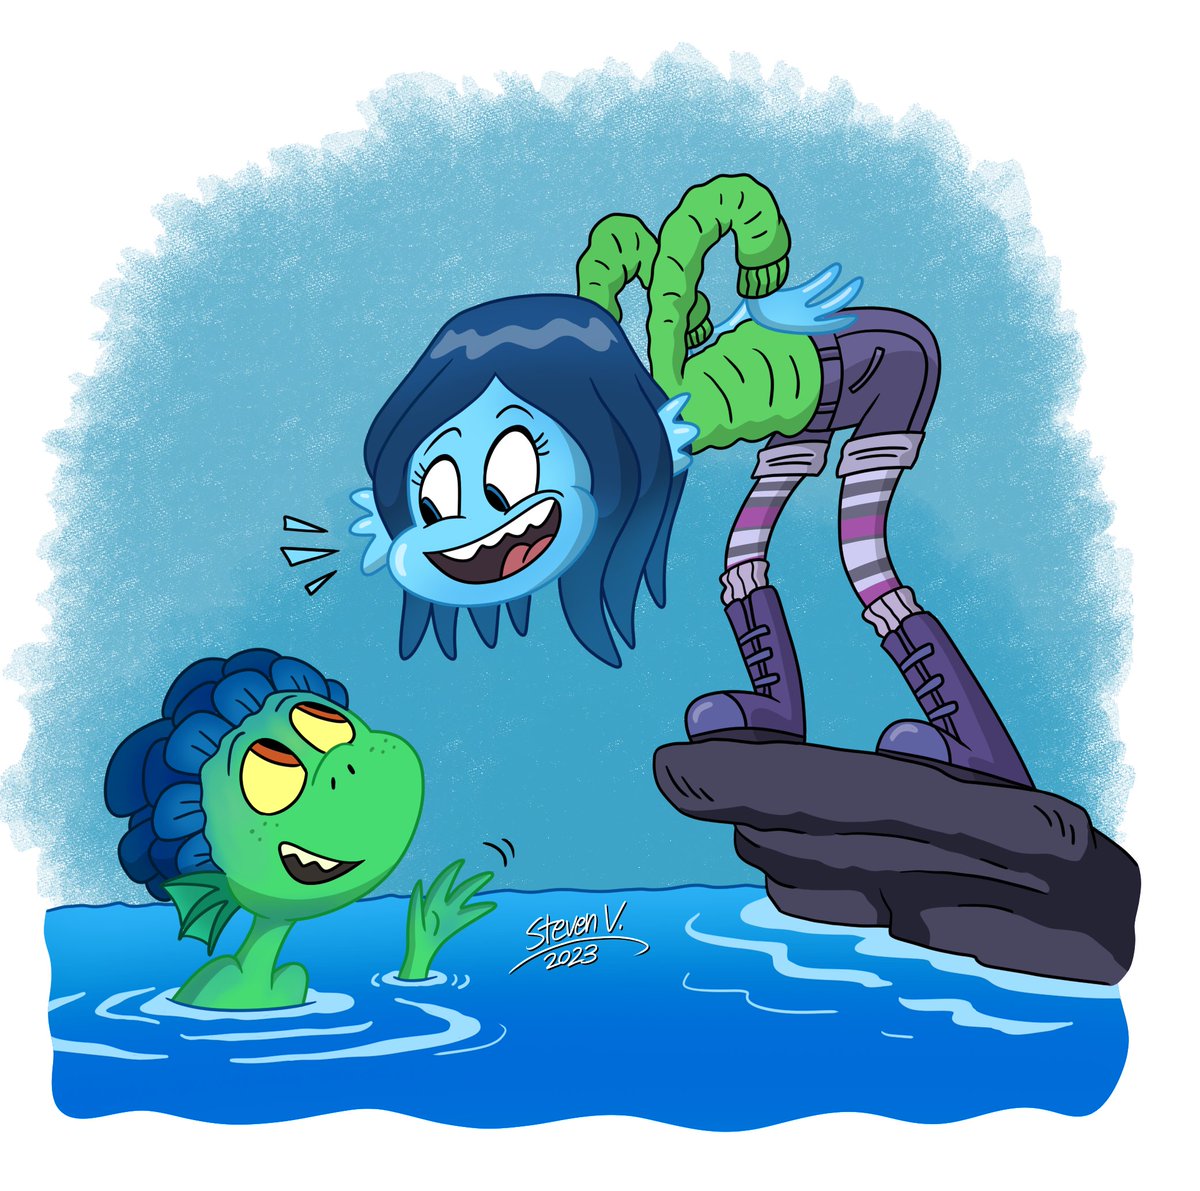 Sea monster friends!
#PixarLuca #RubyGillman